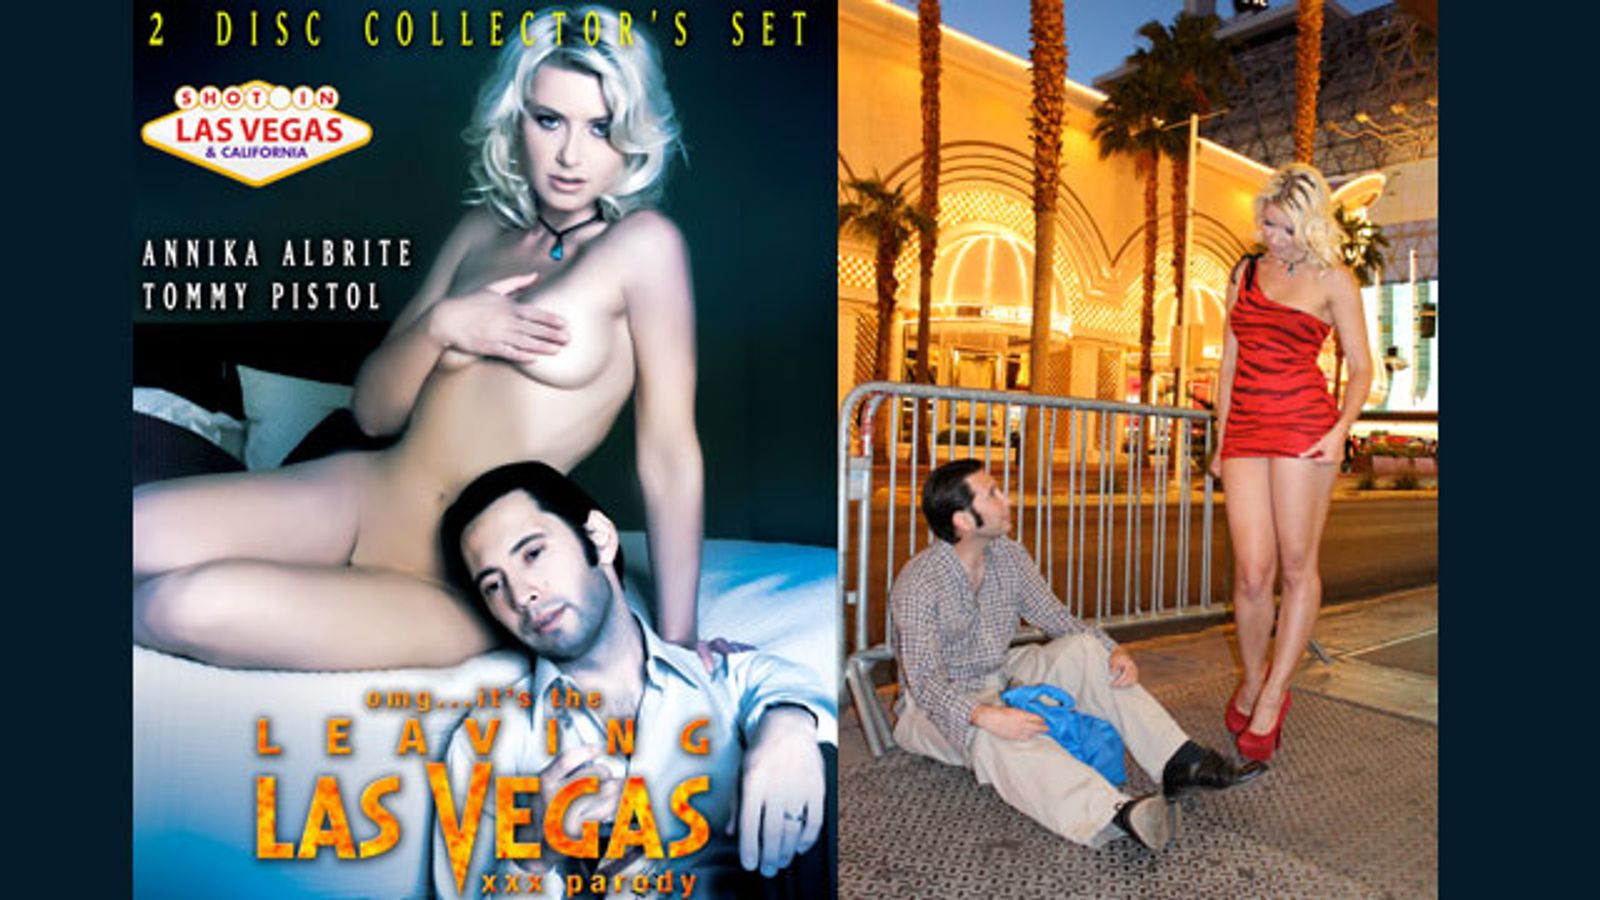 Pistol, Albrite Come On Strong in 'Leaving Las Vegas' Parody